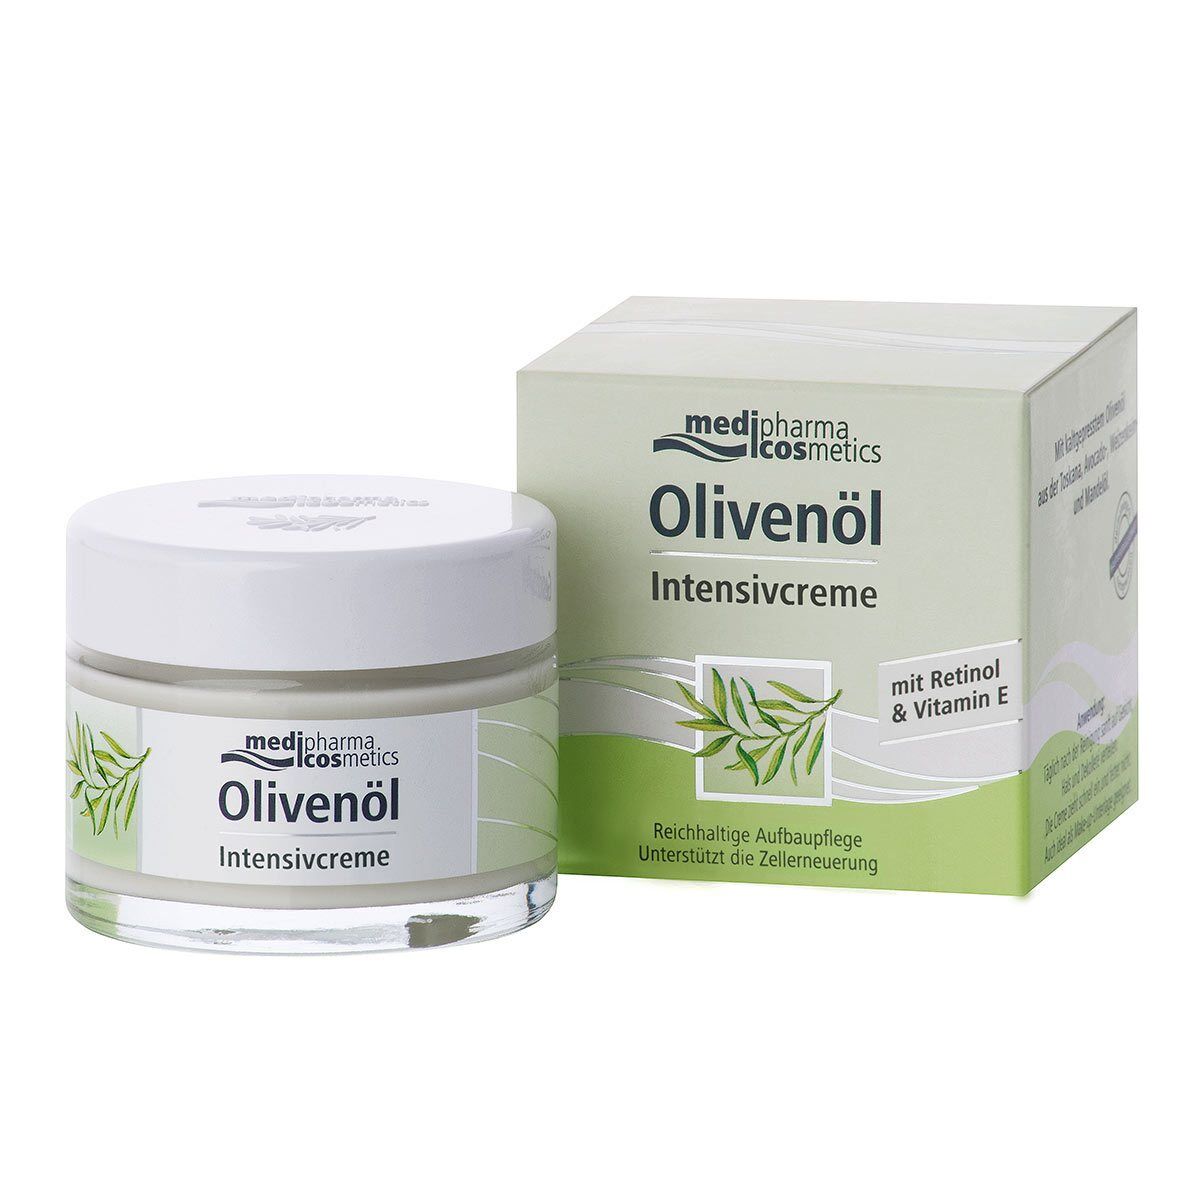 Medipharma Cosmetics - Olivenol Intensivecreme